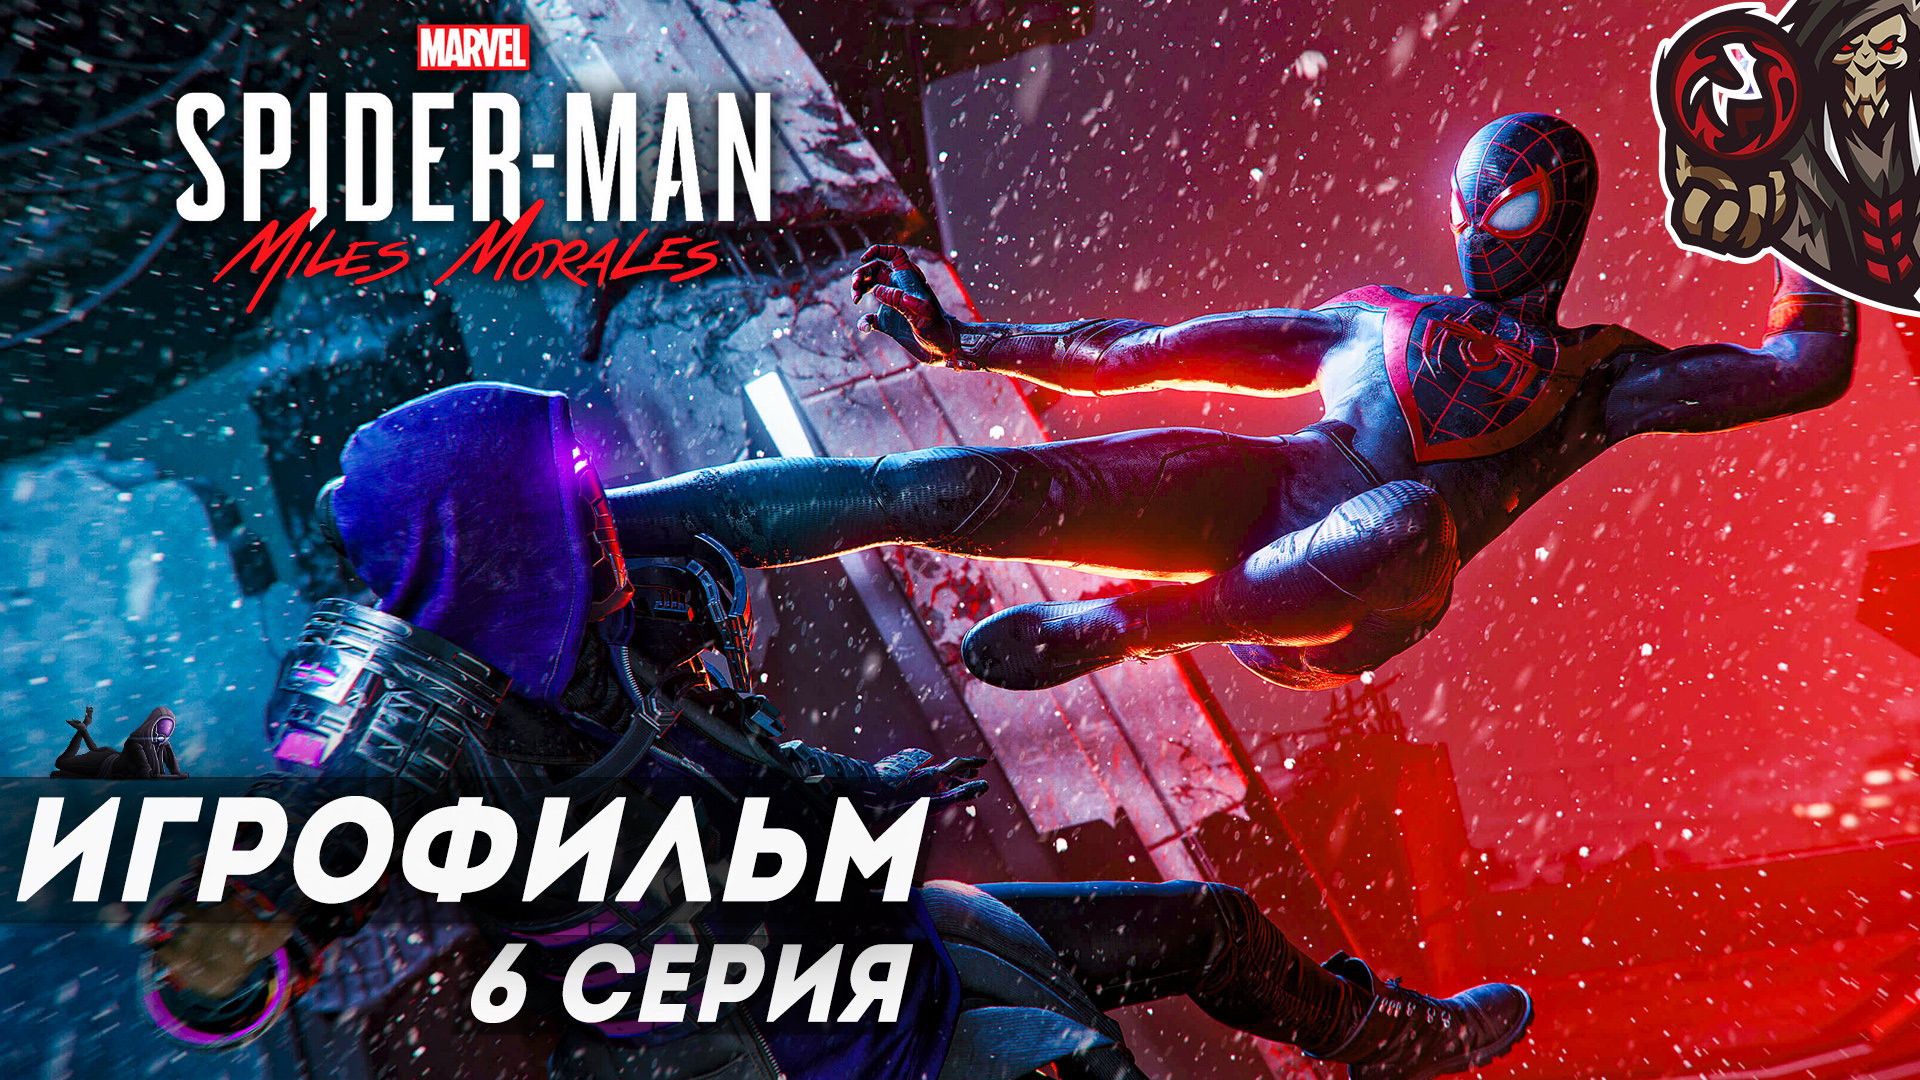 Marvel's Spider-Man: Miles Morales. Игрофильм (русская озвучка) #6 (6)